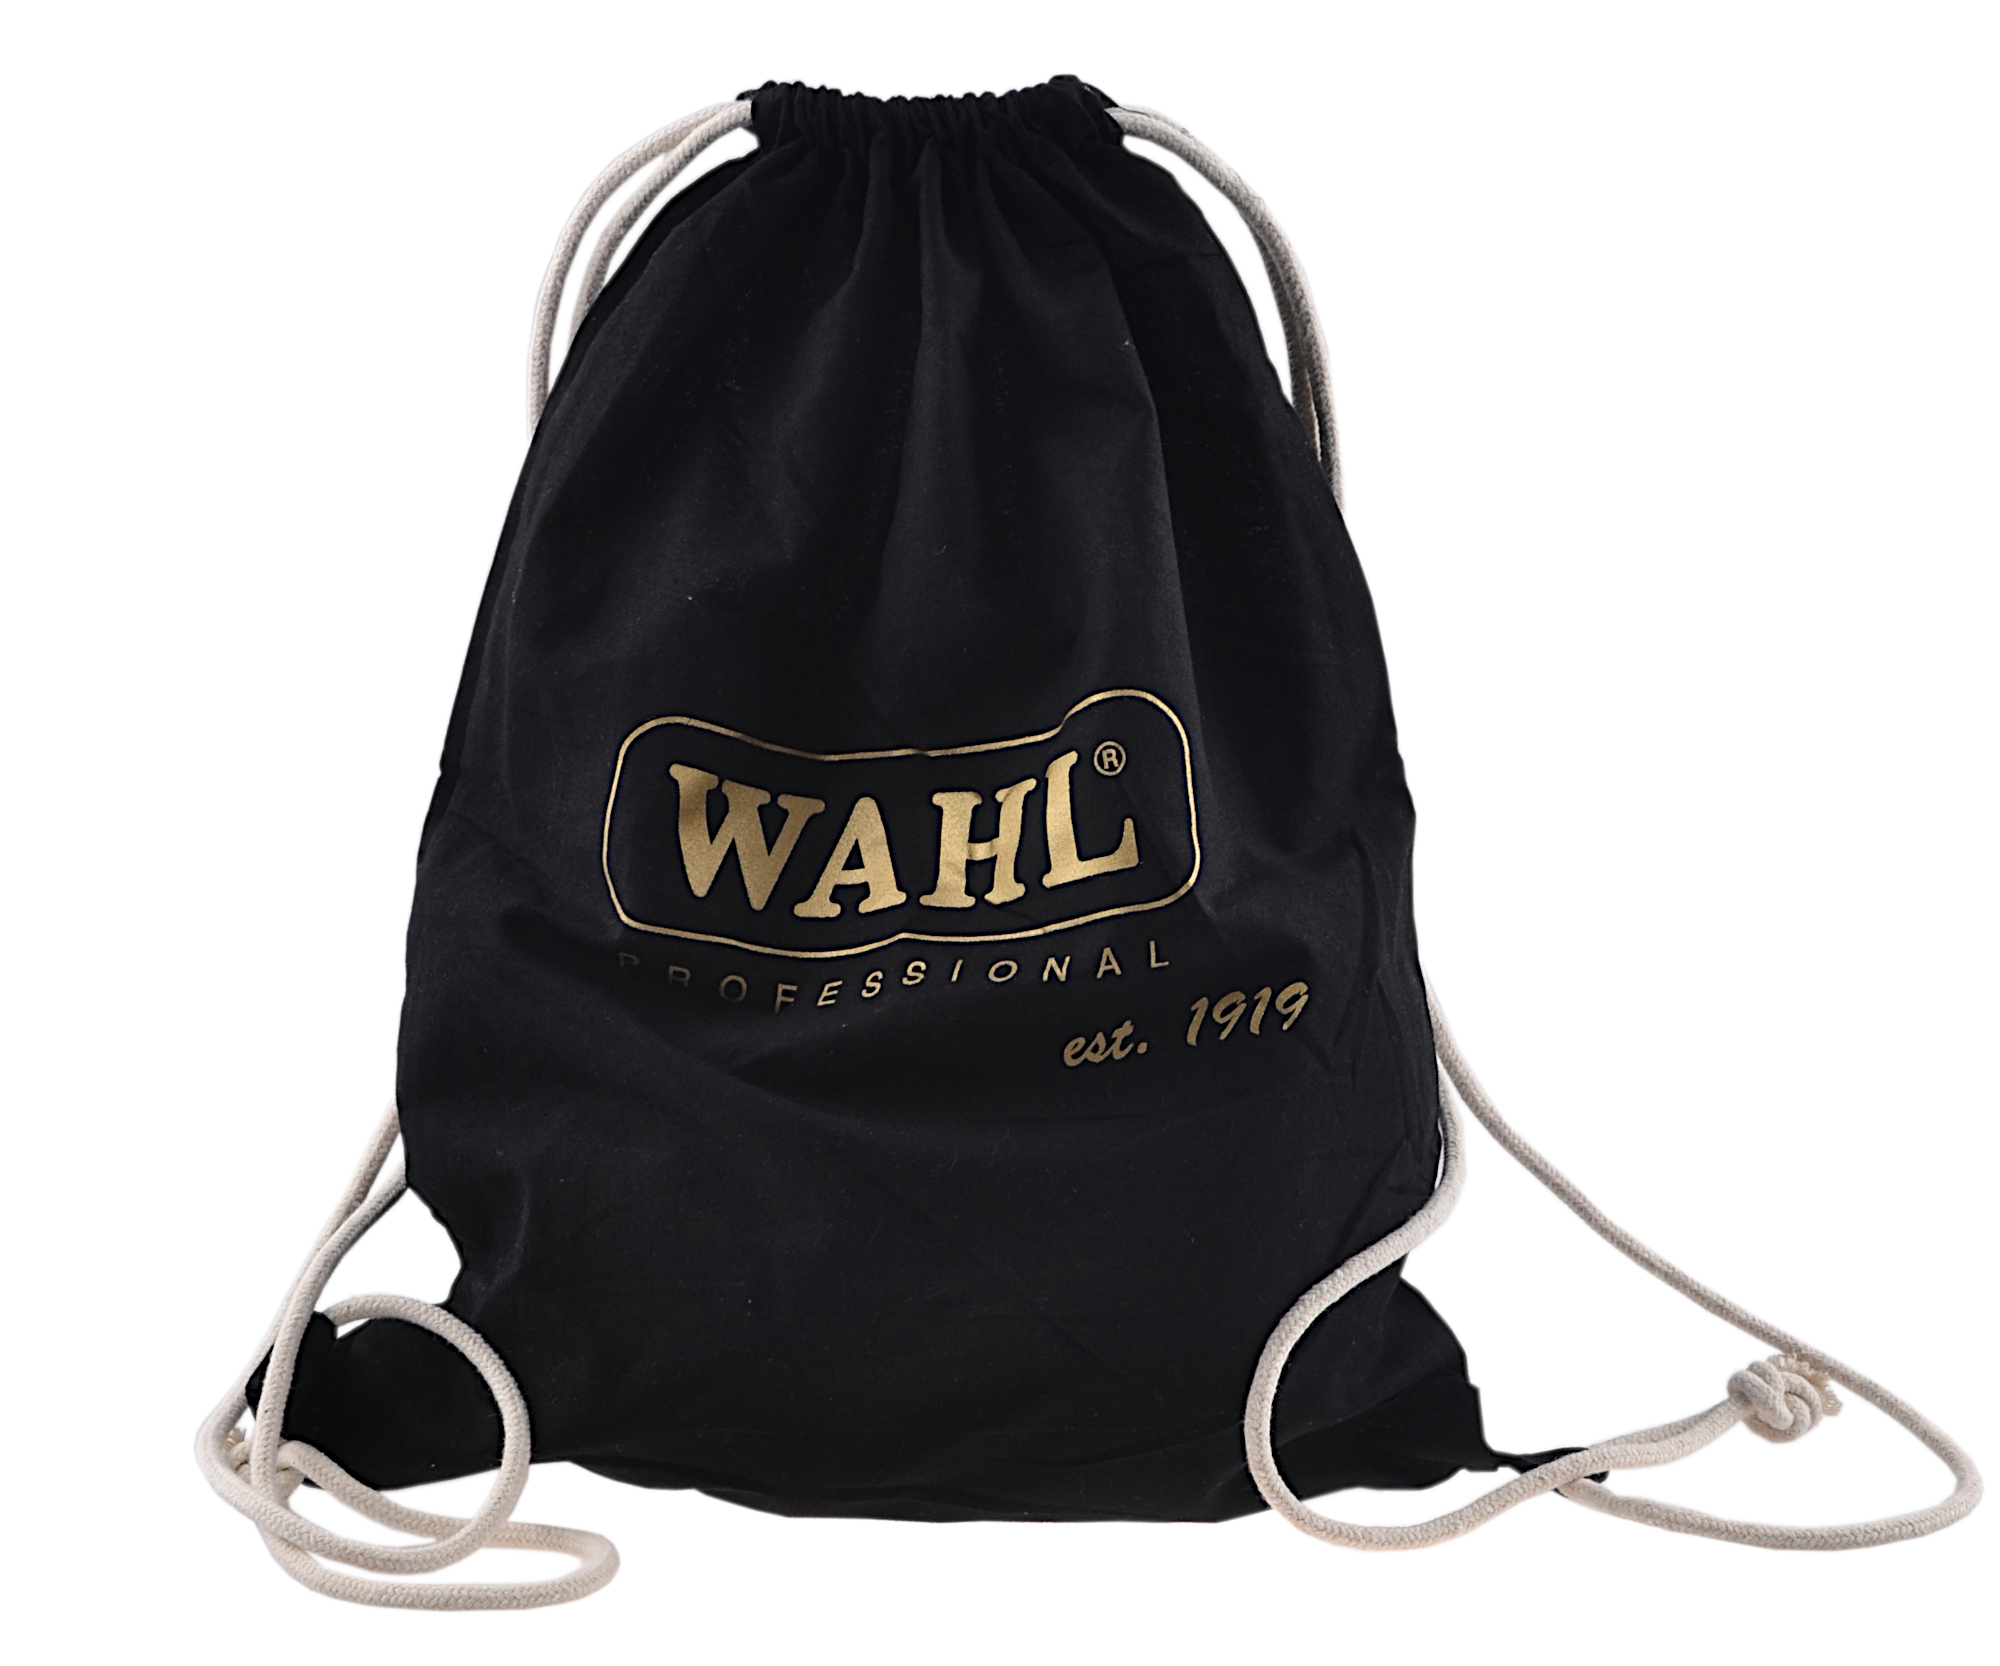 WAHL fabric bag 1